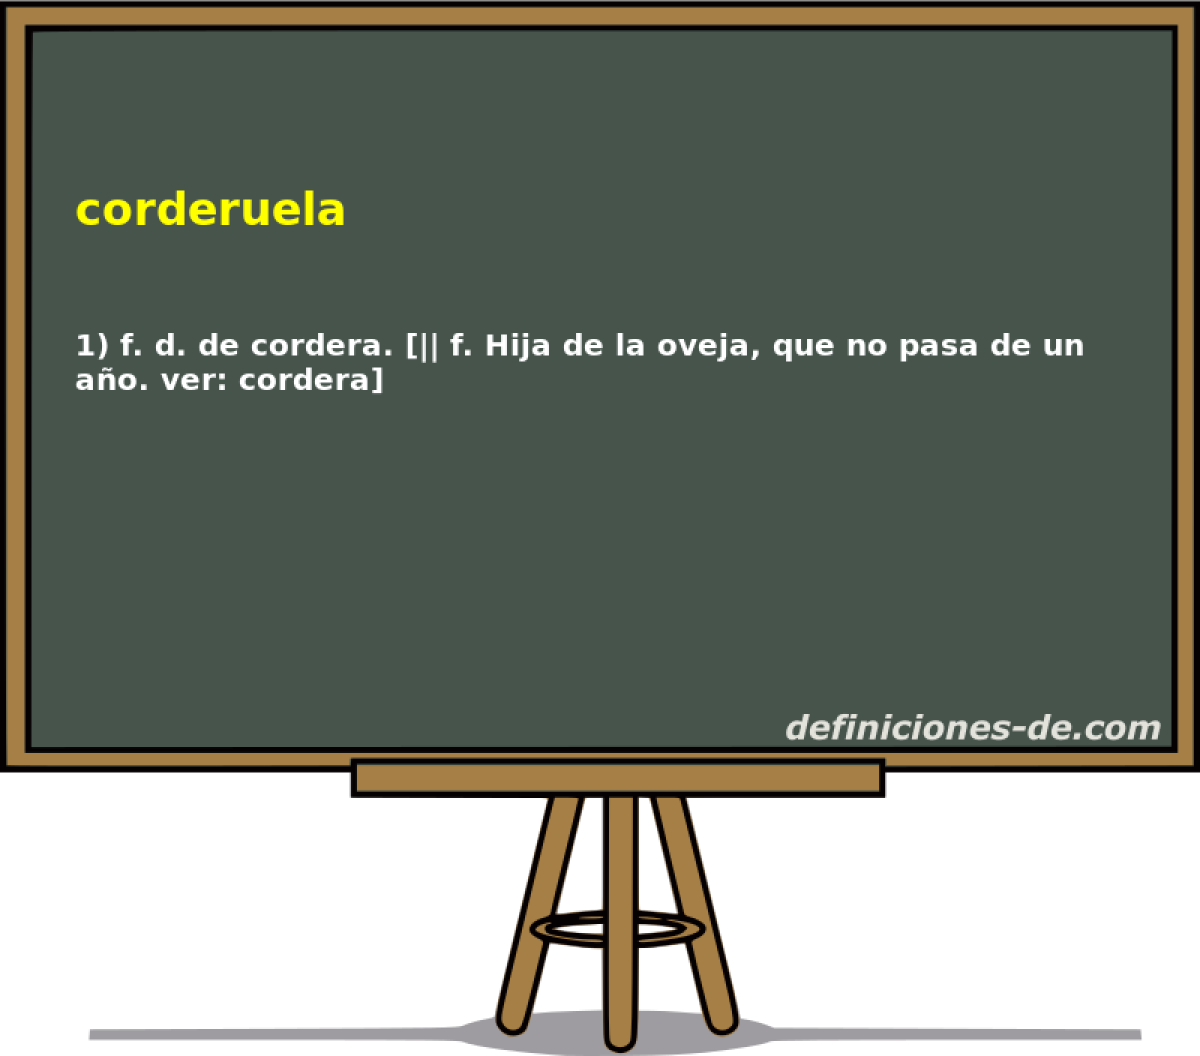 corderuela 